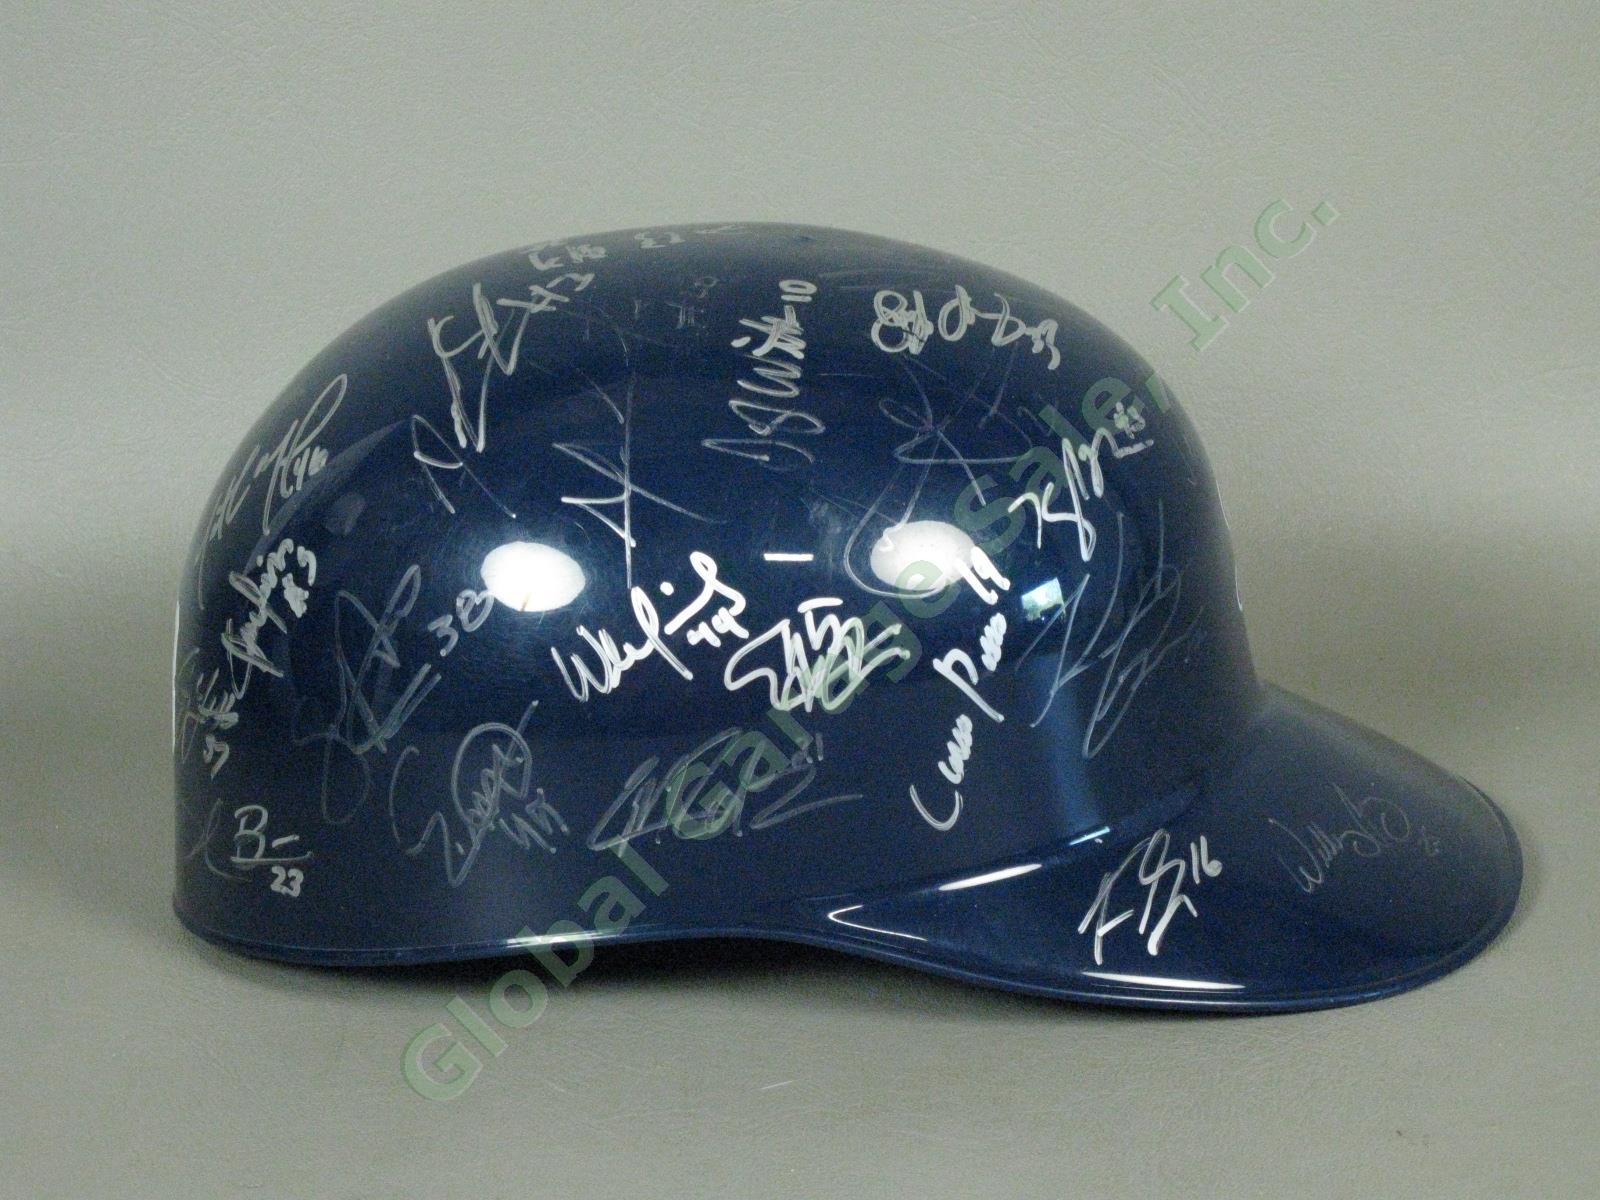 2013 Lowell Spinners Team Signed Baseball Helmet MiLB MLB NYPL Boston Red Sox NR 1